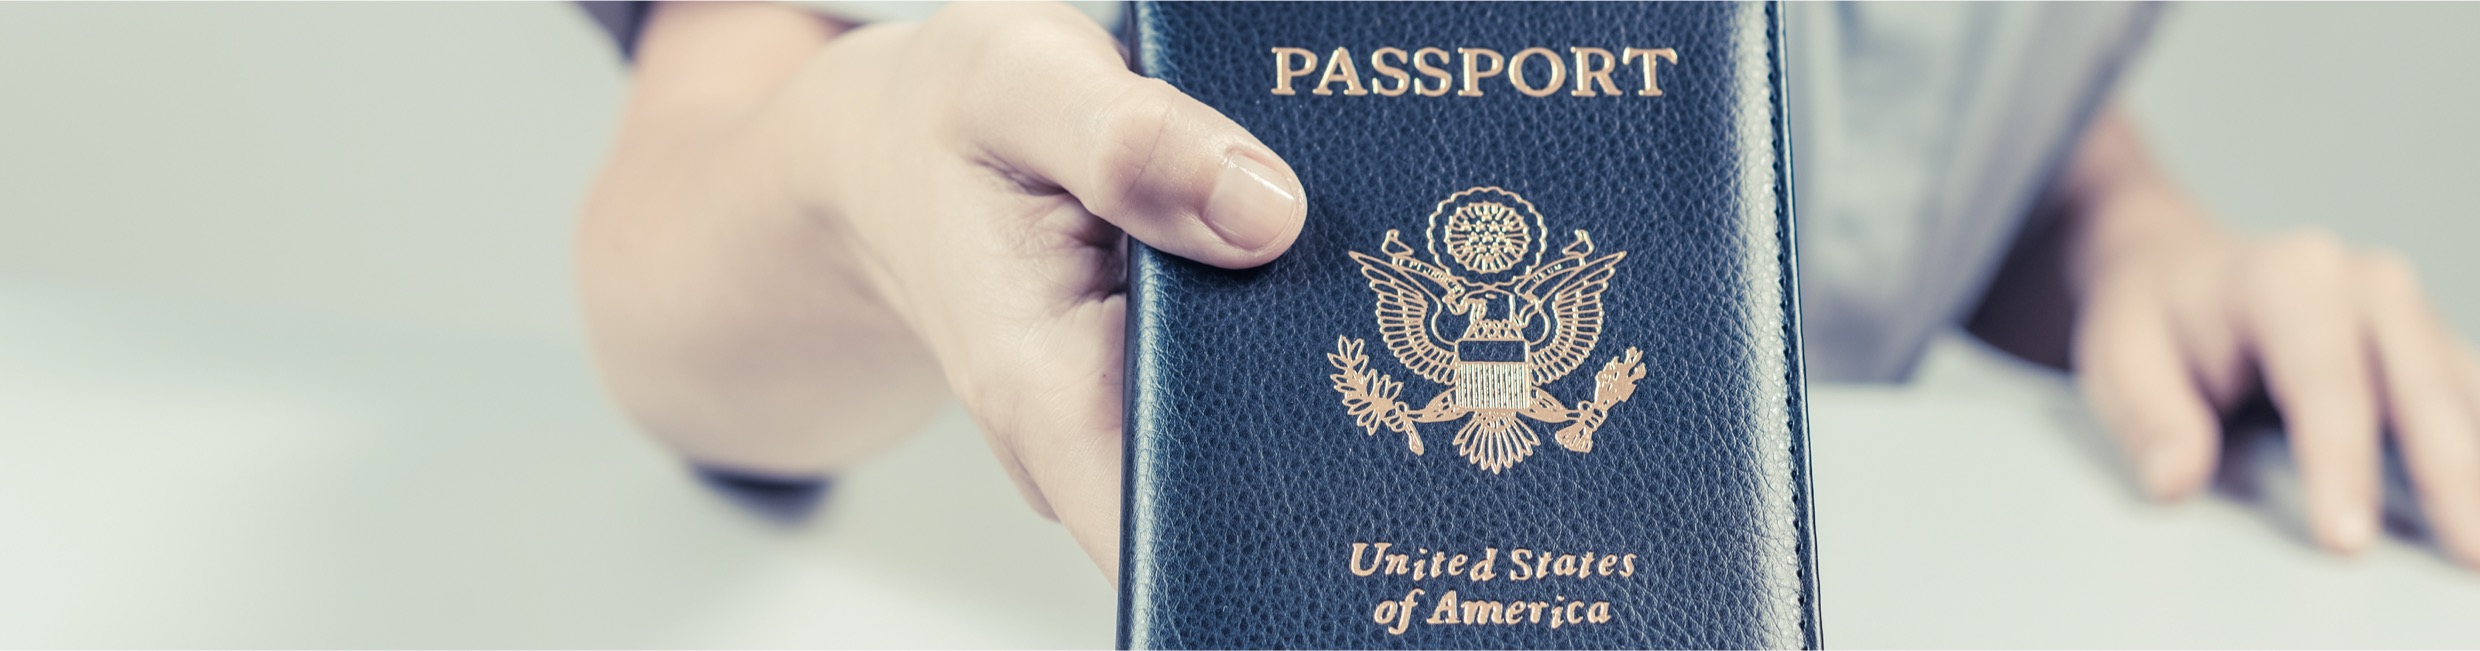 Rush my passport airside mobile US United States